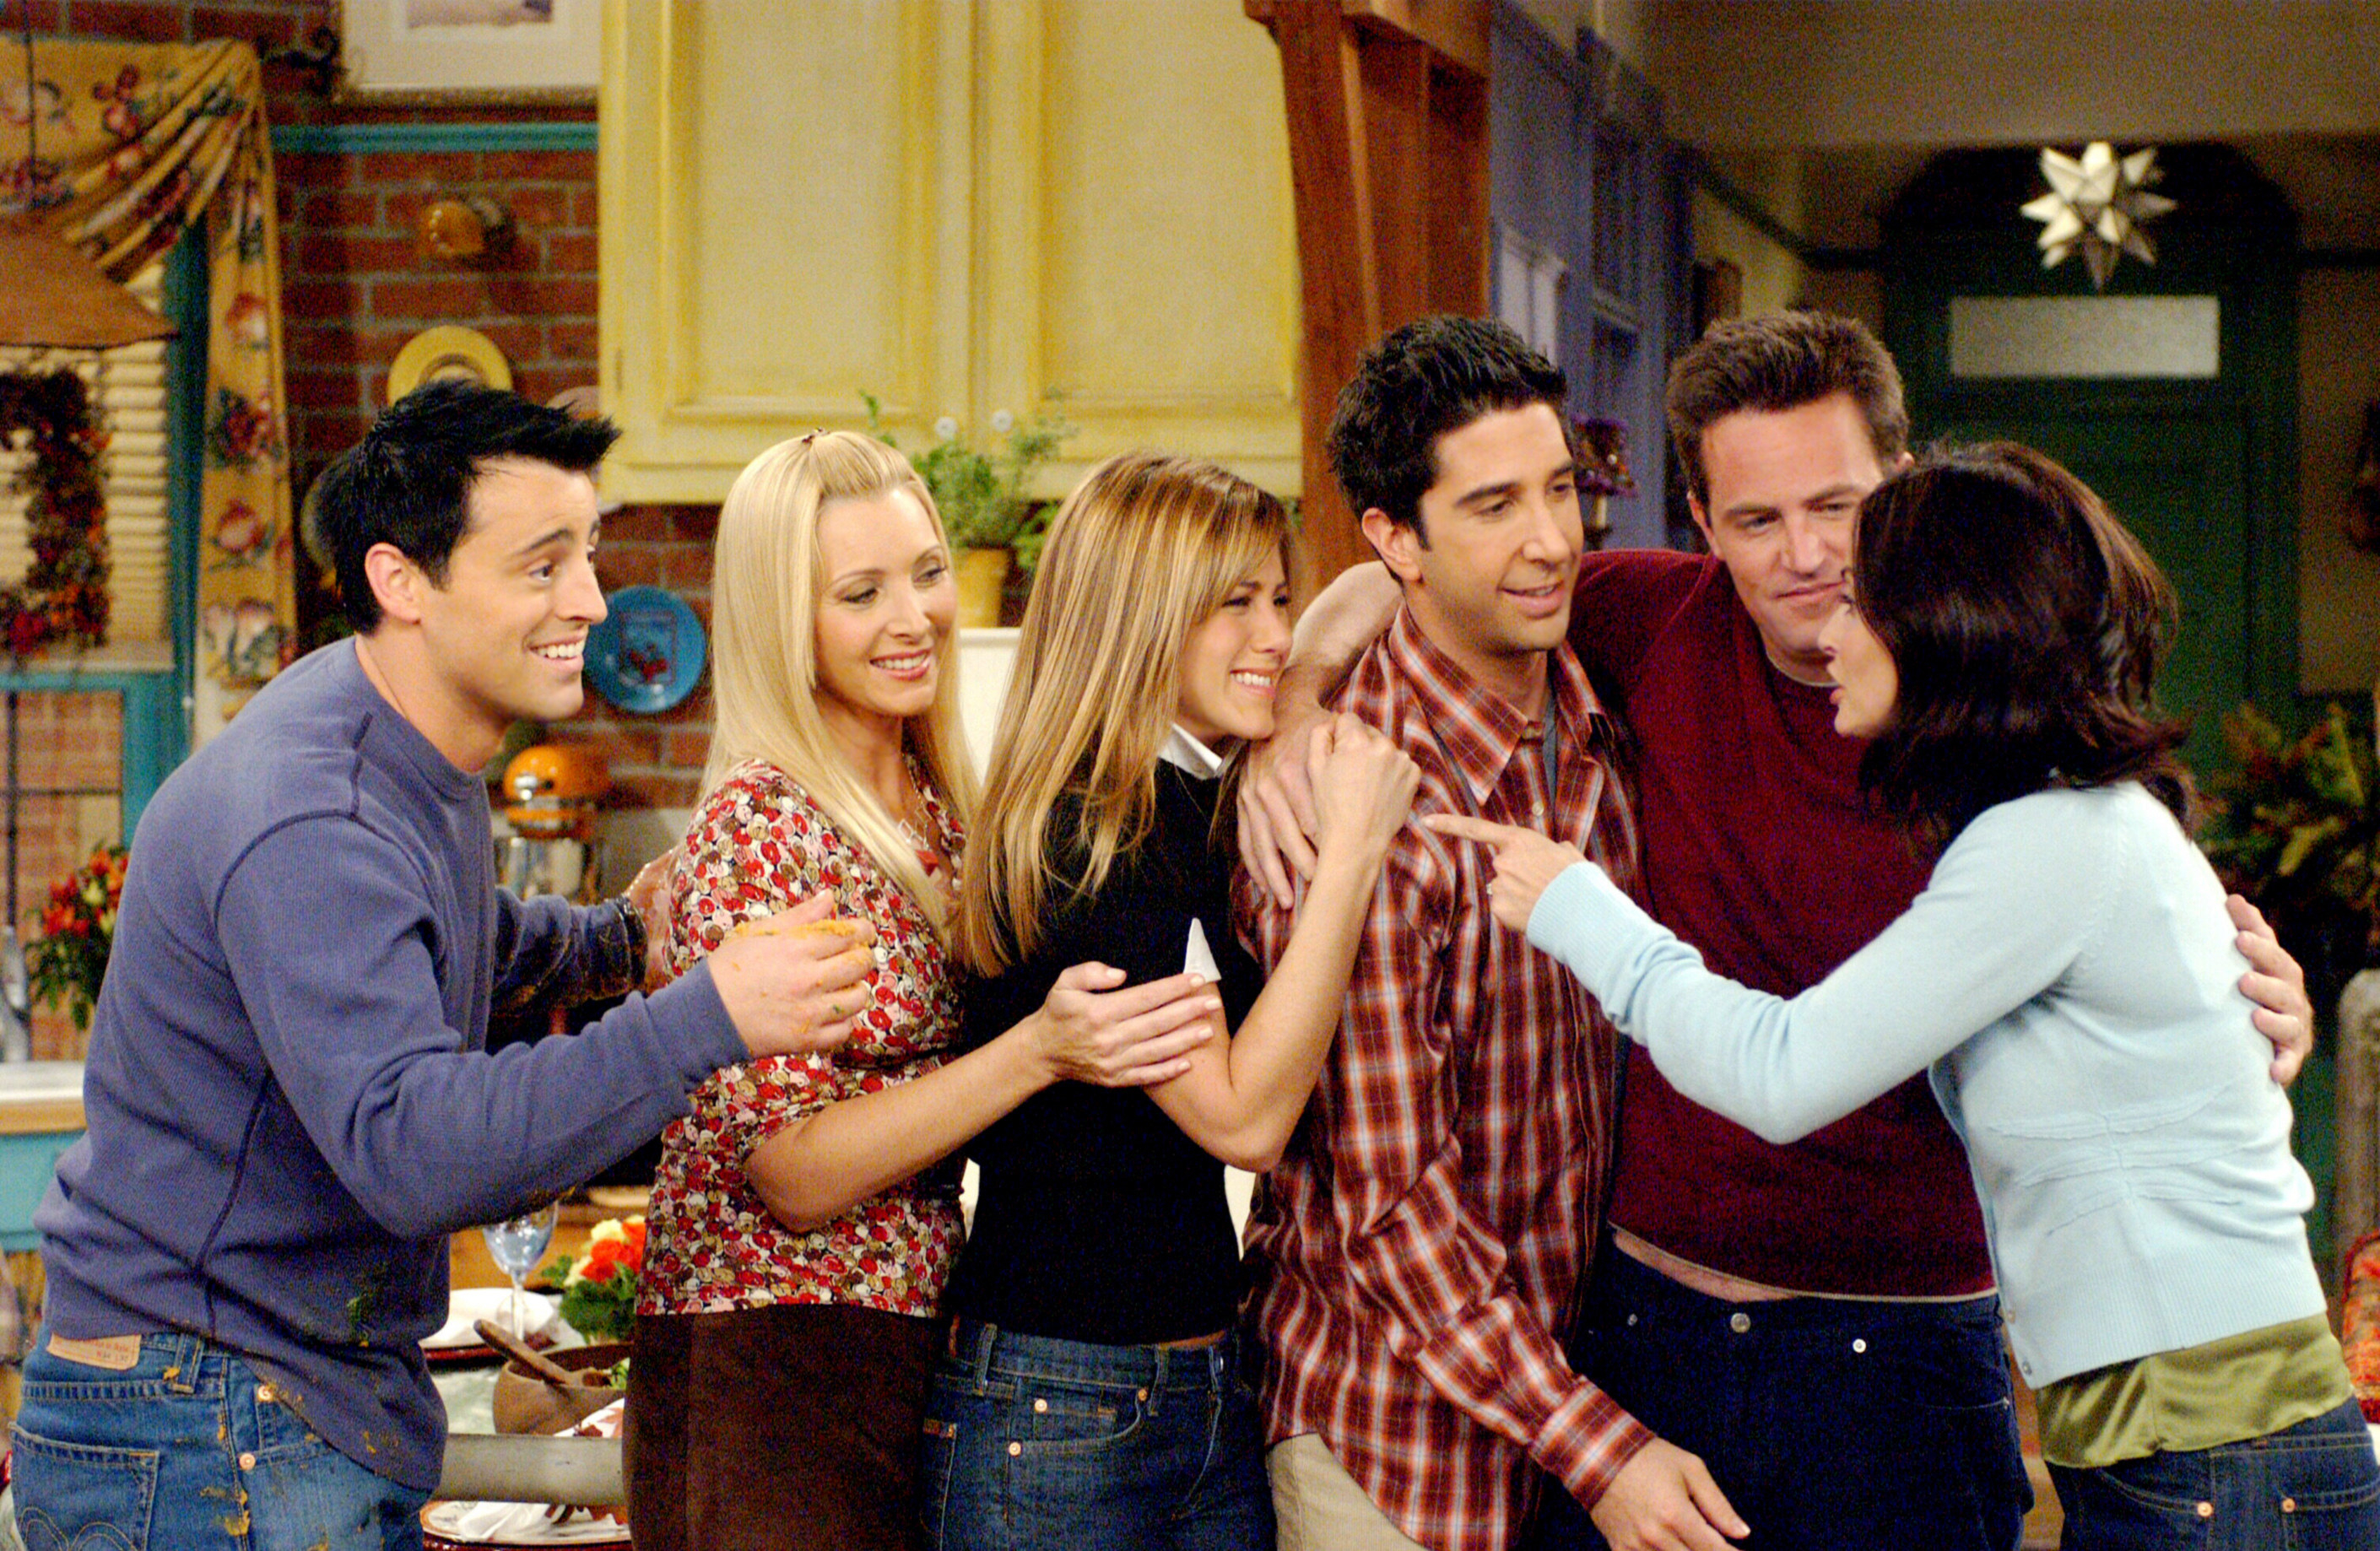 The cast of Friends hugging in a scene